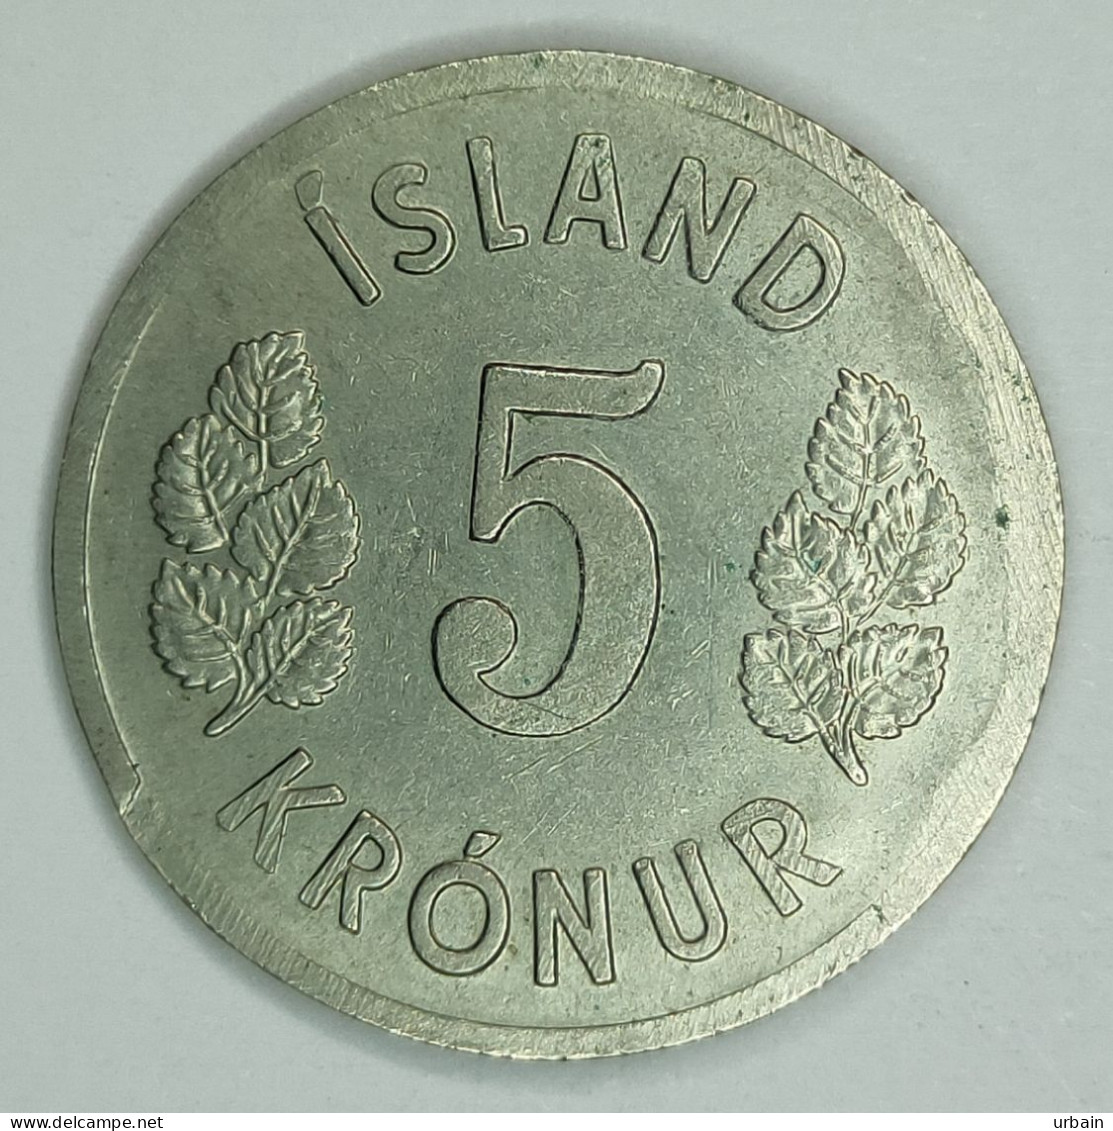 2x Coins - ICELAND - Republic Of Iceland (1944 - 1980) - Islanda